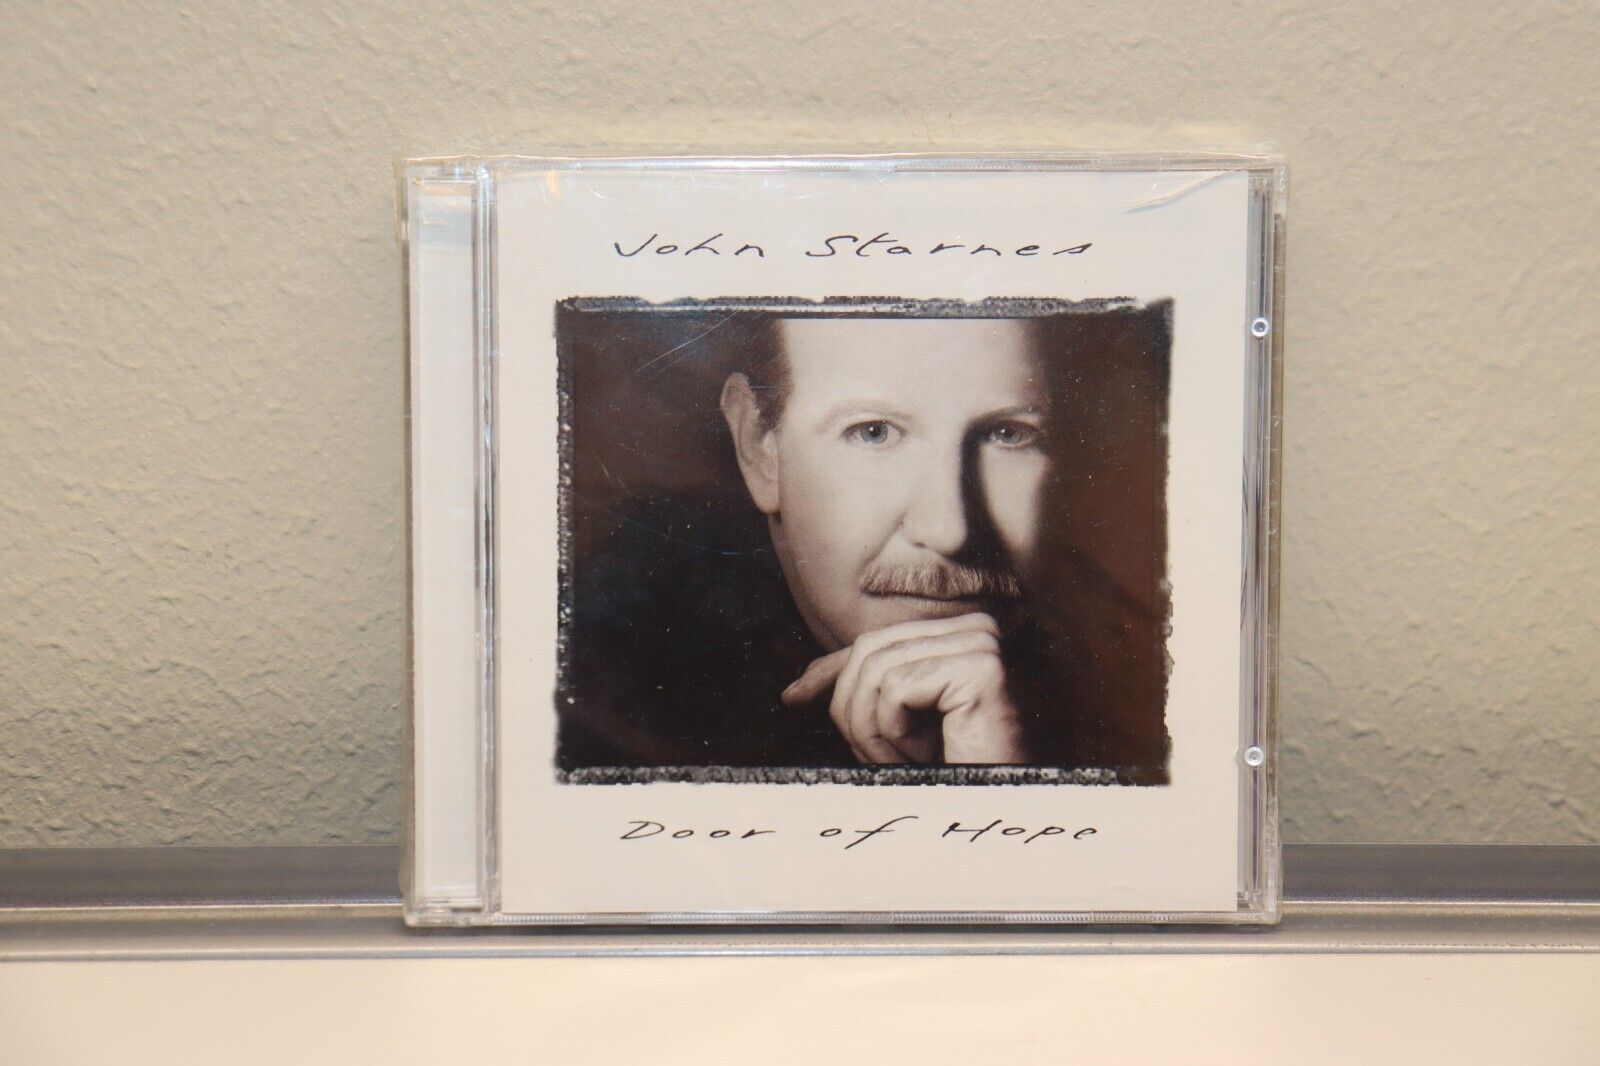 Vintage 1996 Door of Hope CD by John Starnes SEALED (READ DESCRIPTION)